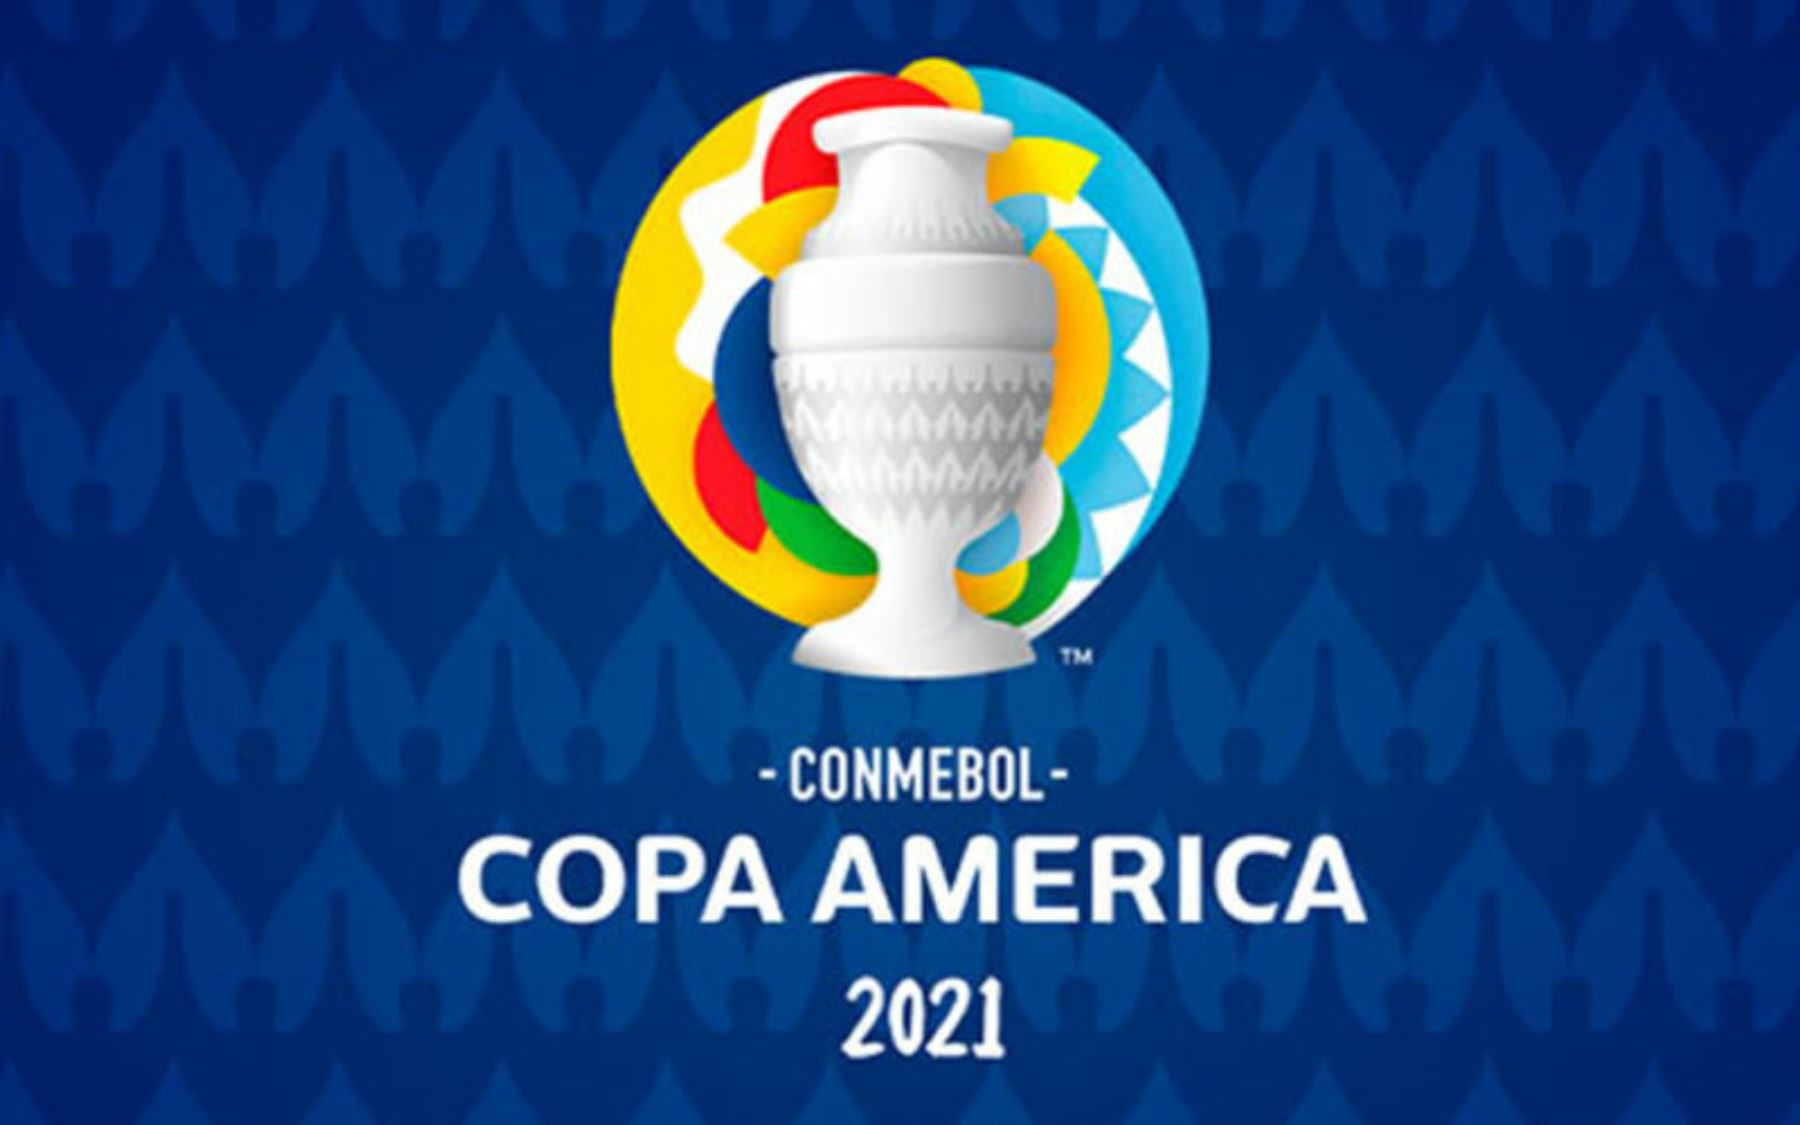 CONMEBOL COPA AMERICA 2021